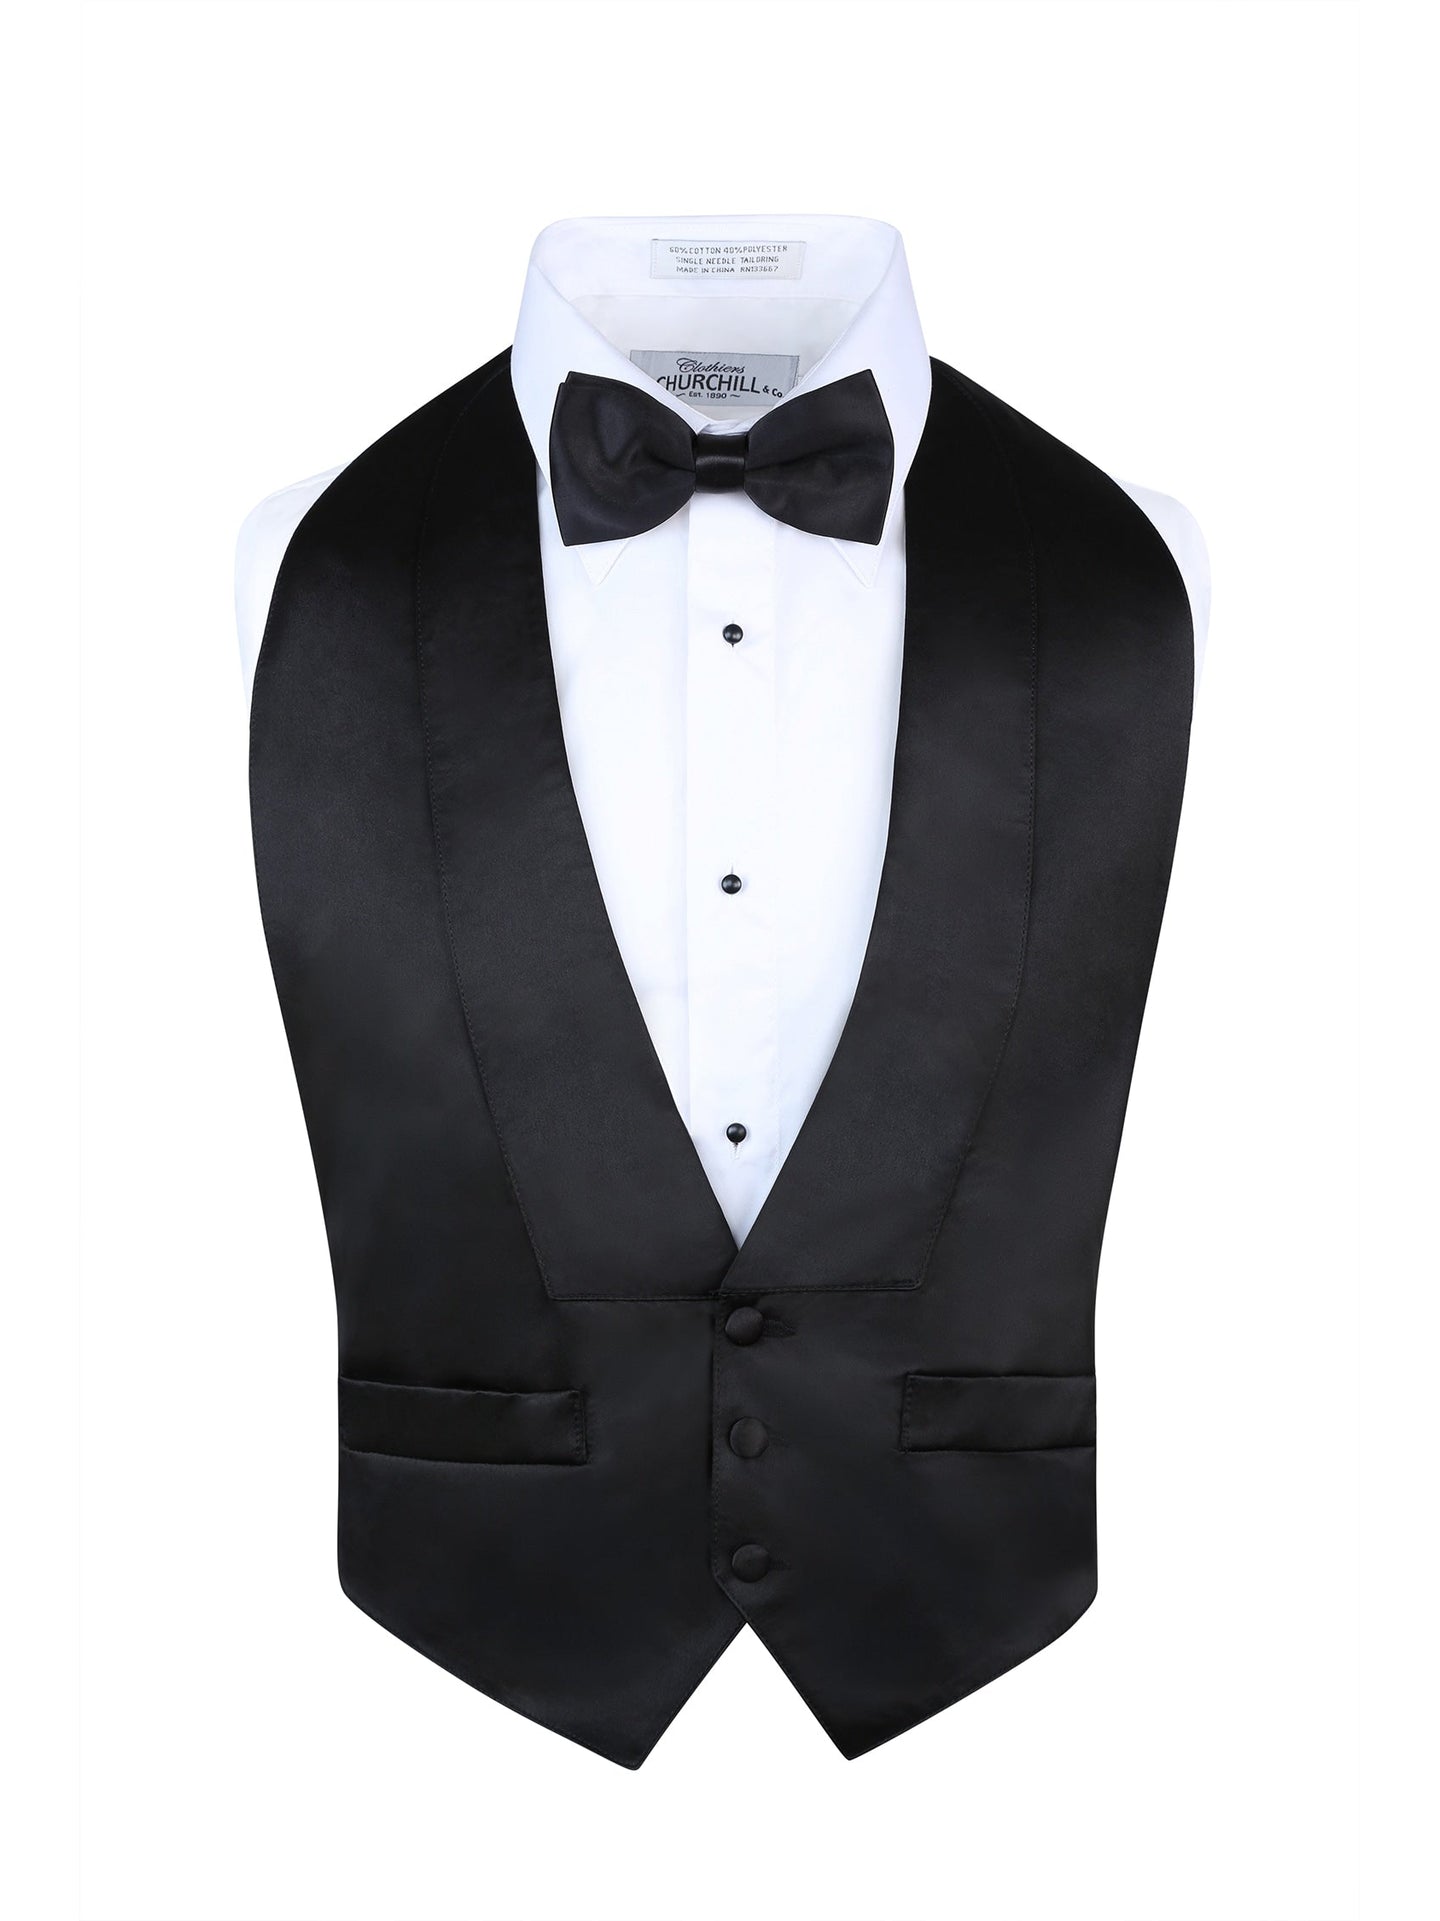 S.H. Churchill & Co. Men's Satin Black Backless Vest & Bow Tie Set